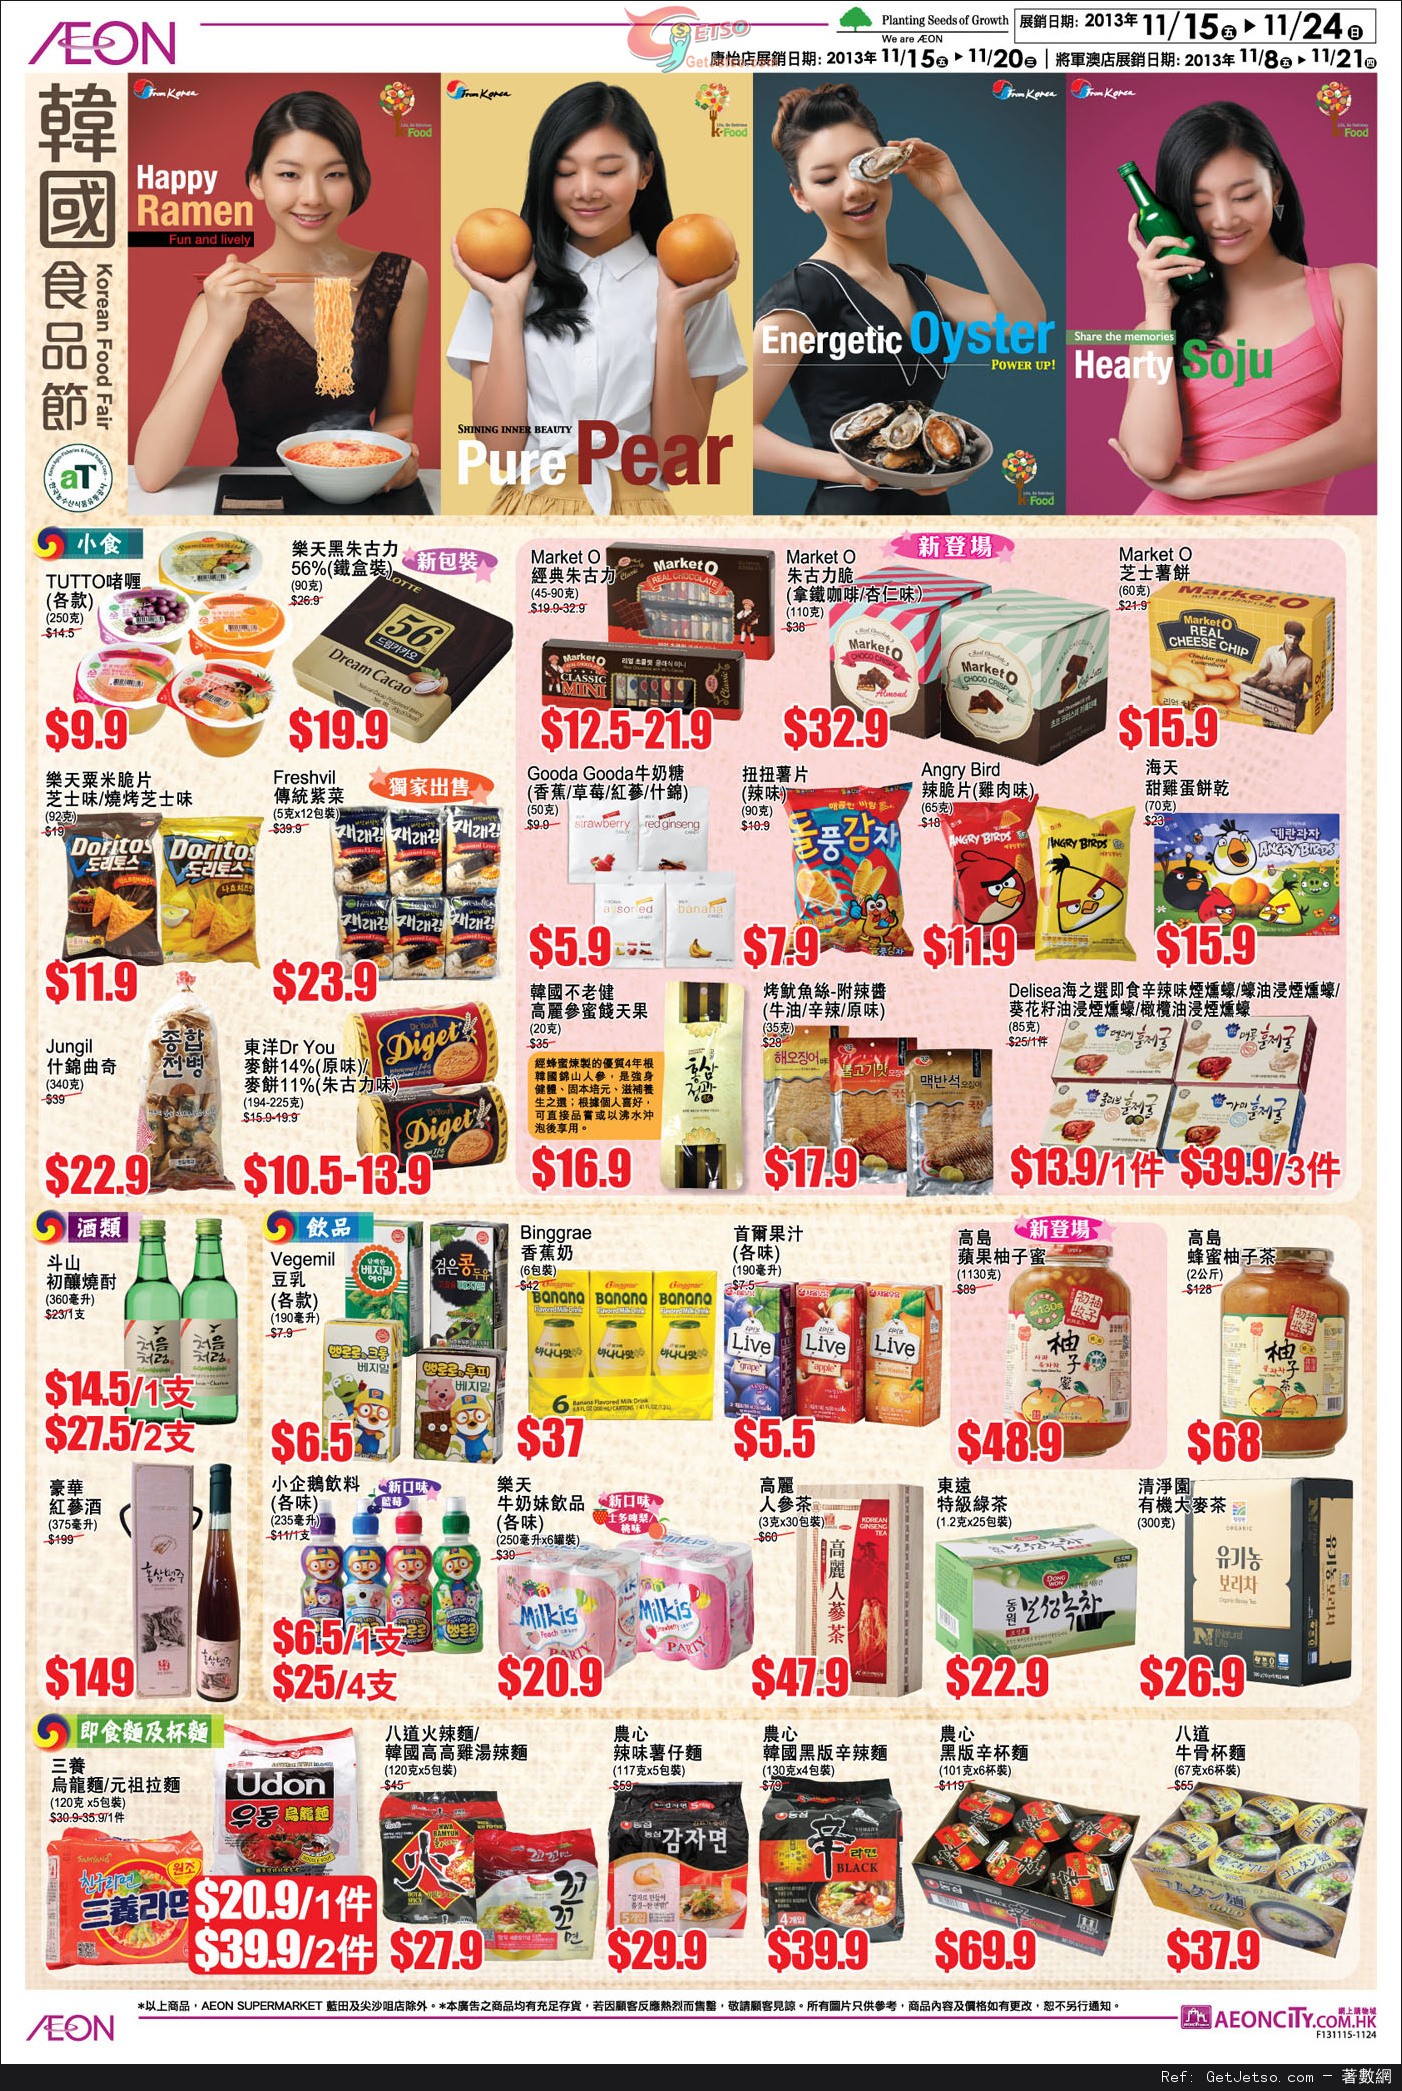 AEON 韓國食品節購物優惠(至13年11月24日)圖片2